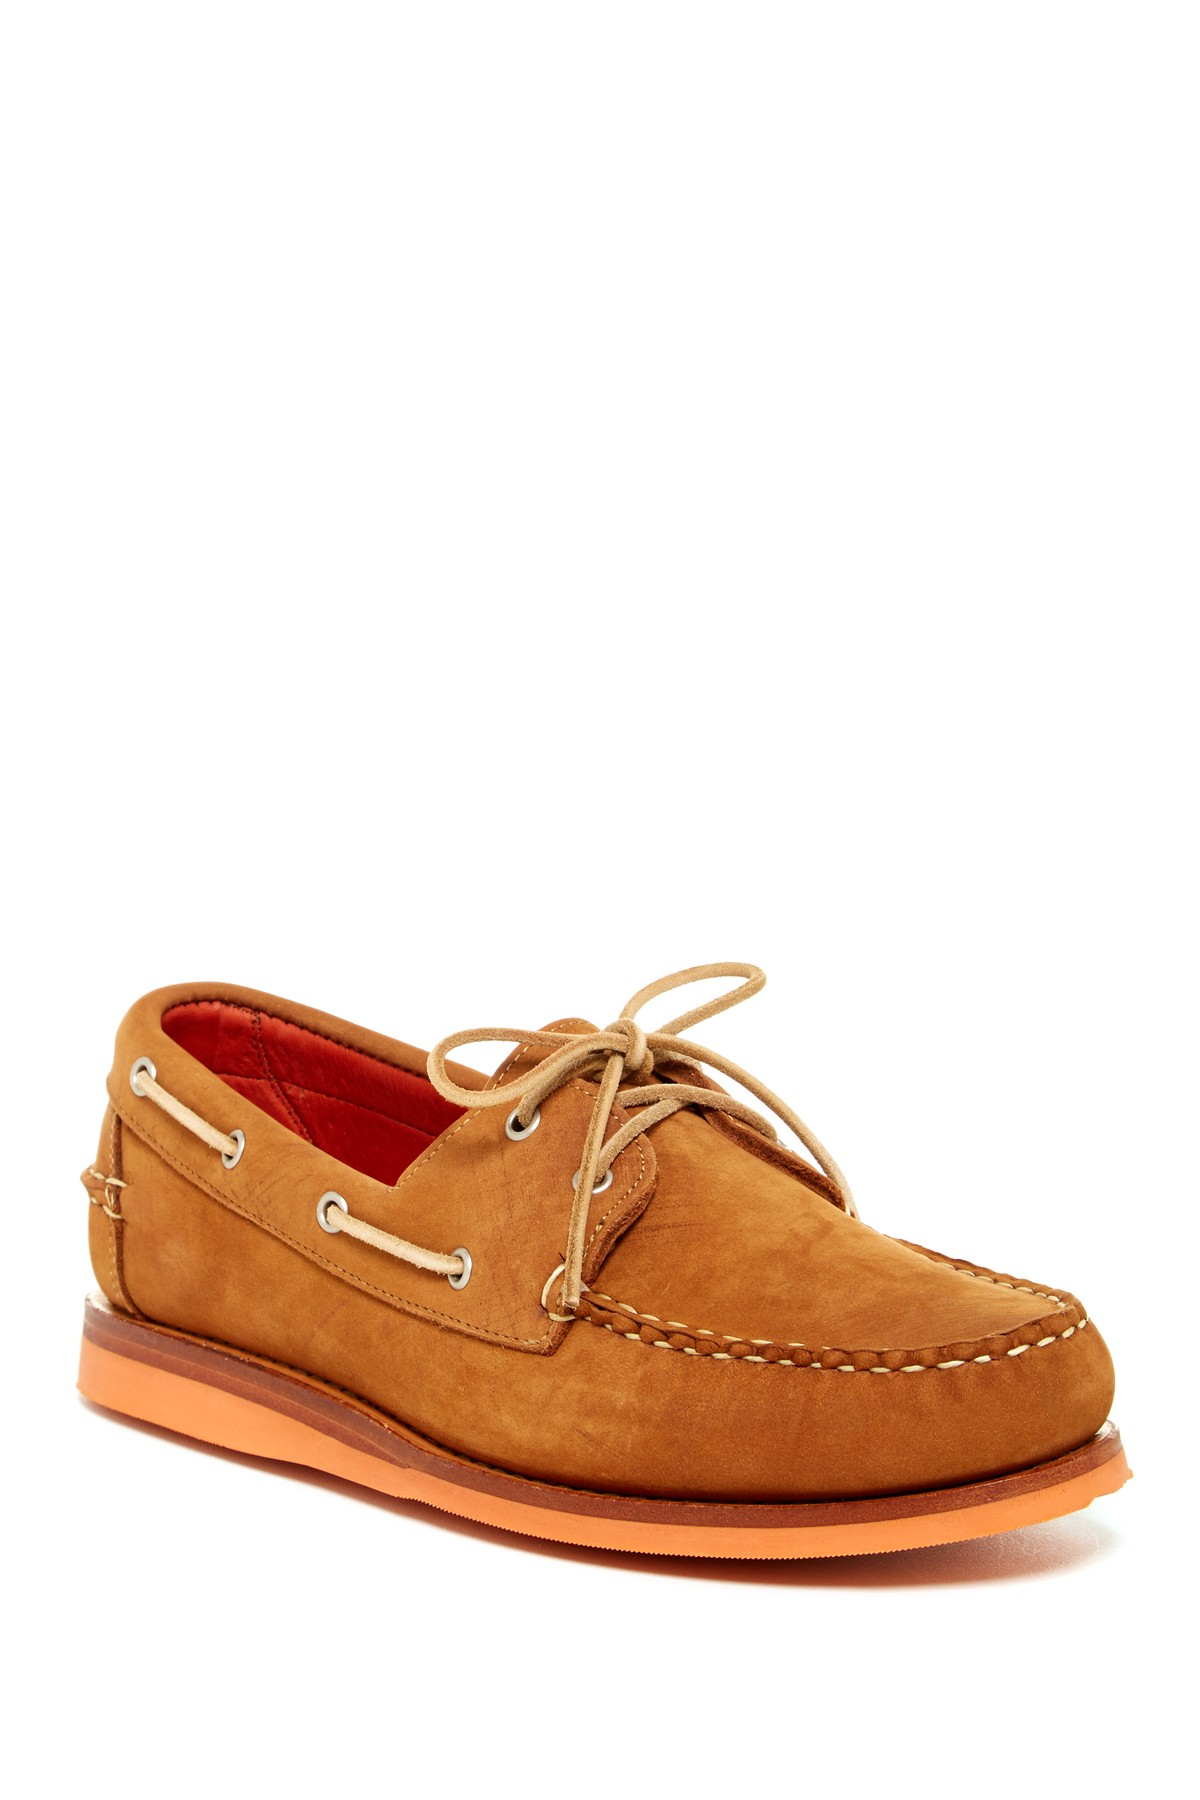 Allen Edmonds Leather South Shore Boat Shoe in Tan (Brown) for Men - Lyst